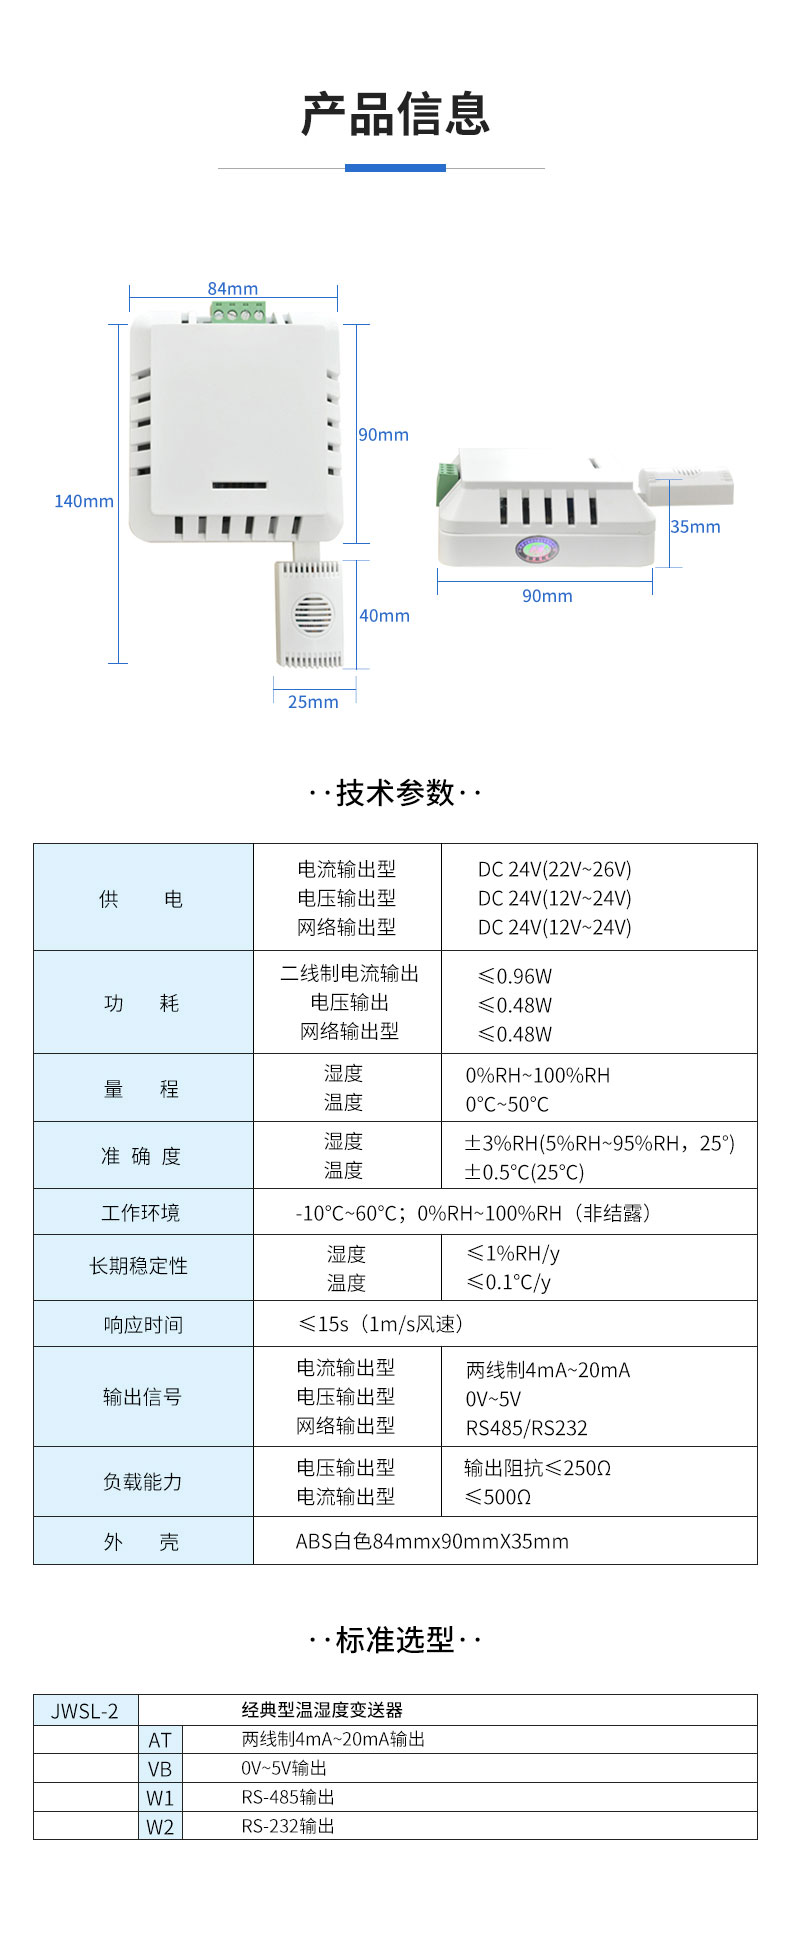 JWSL-2系列壁挂型温湿度变送器温湿度传感器批发详情咨询北京昆仑邦达联合科技有限公司